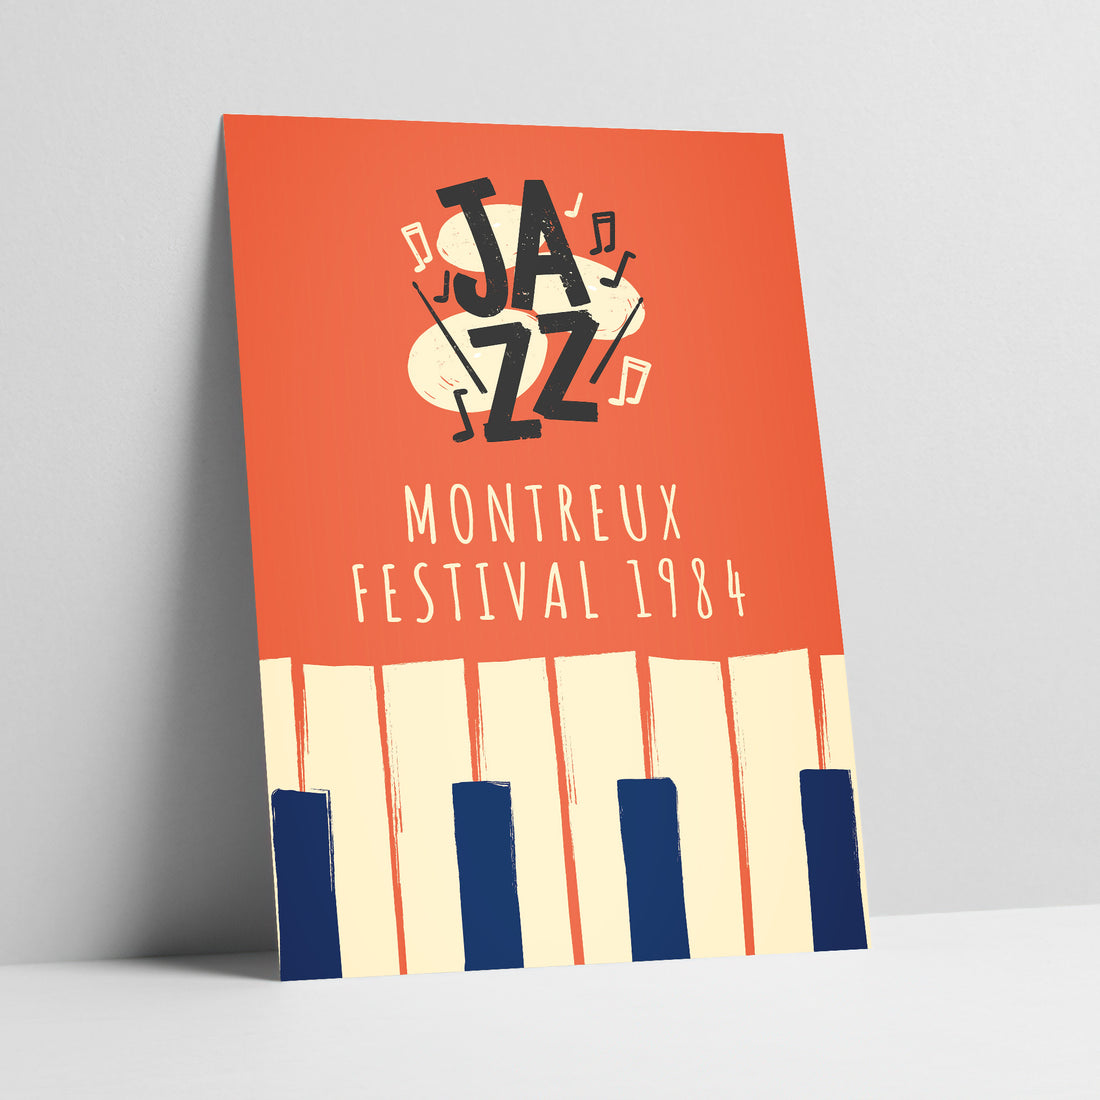 Montreux Jazz Festival 1984 Art Print